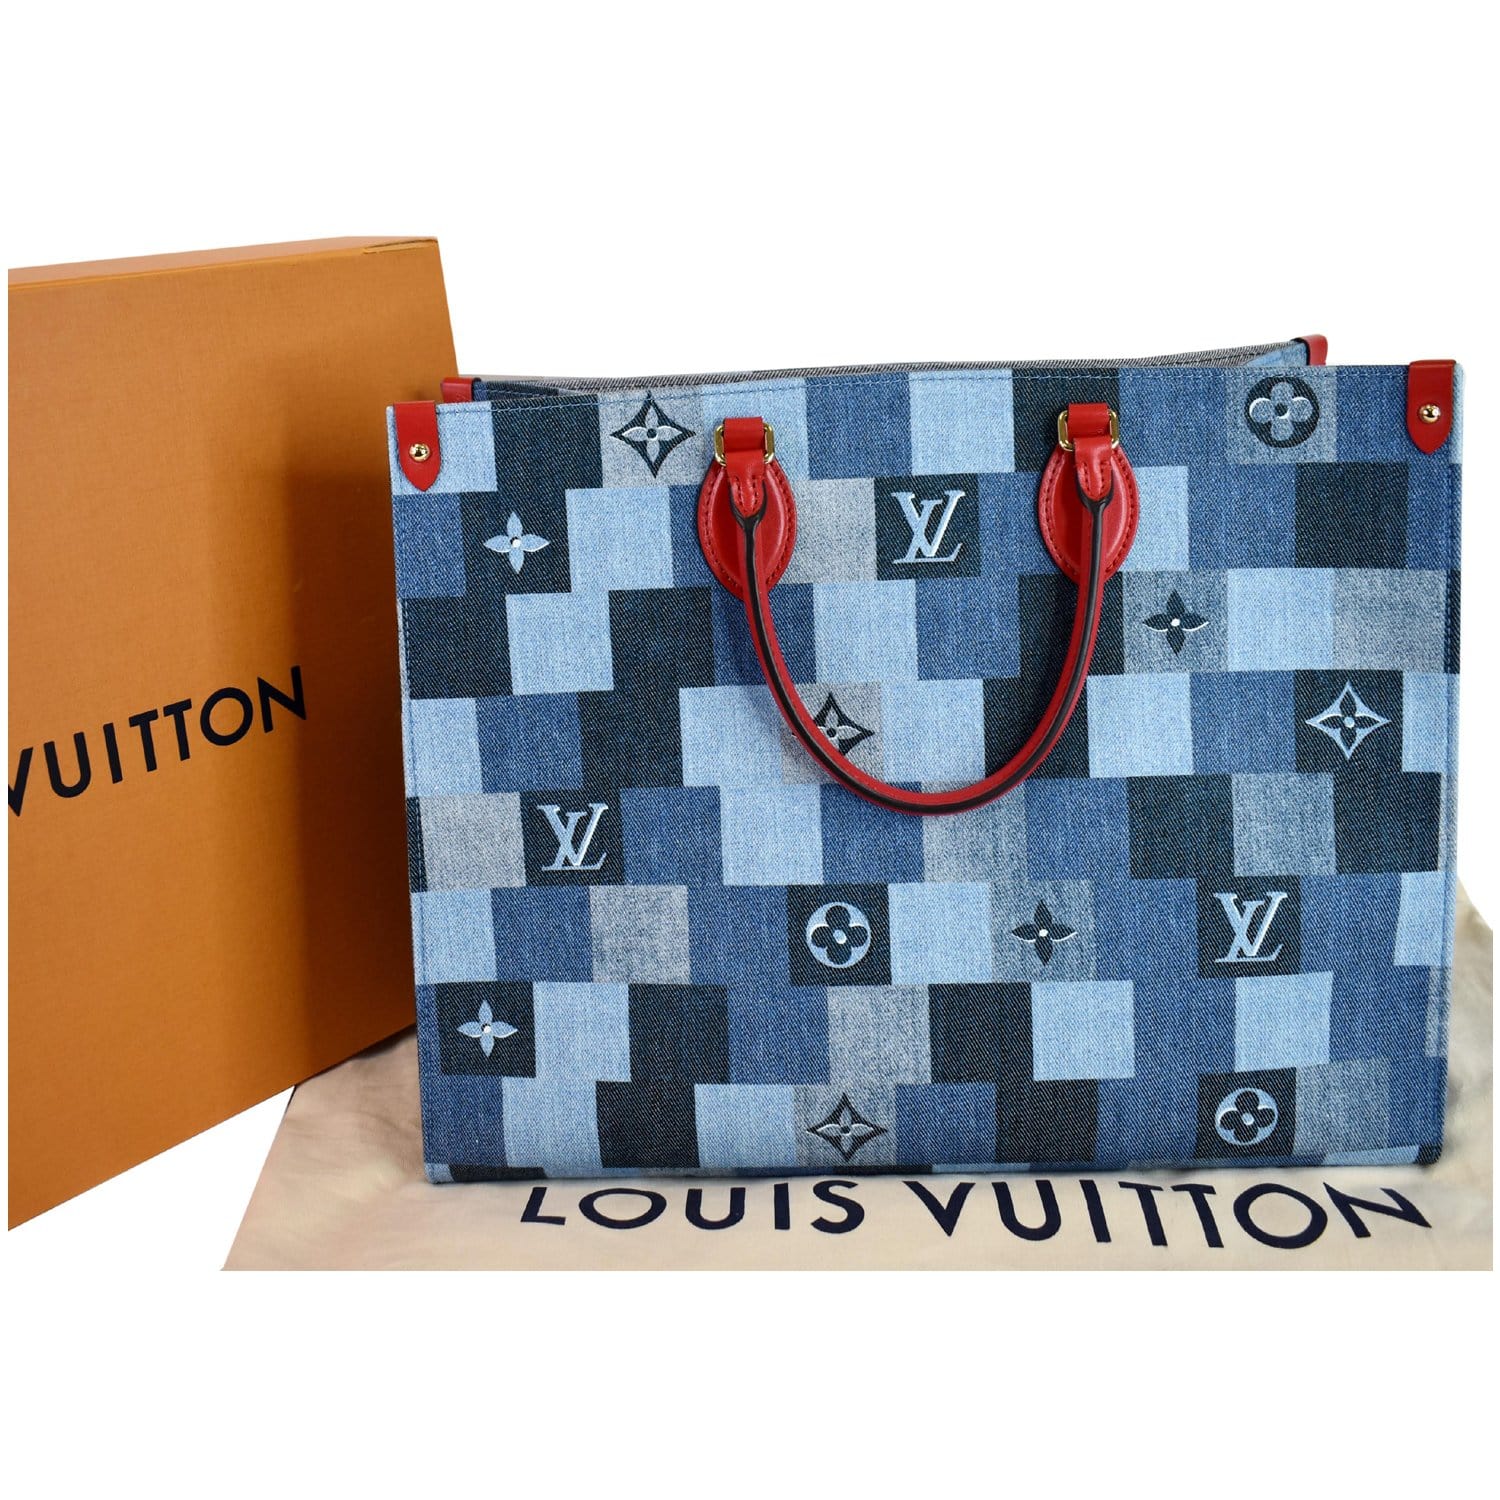 Meet The Reintroduced Cité Bag From Louis Vuitton - BAGAHOLICBOY